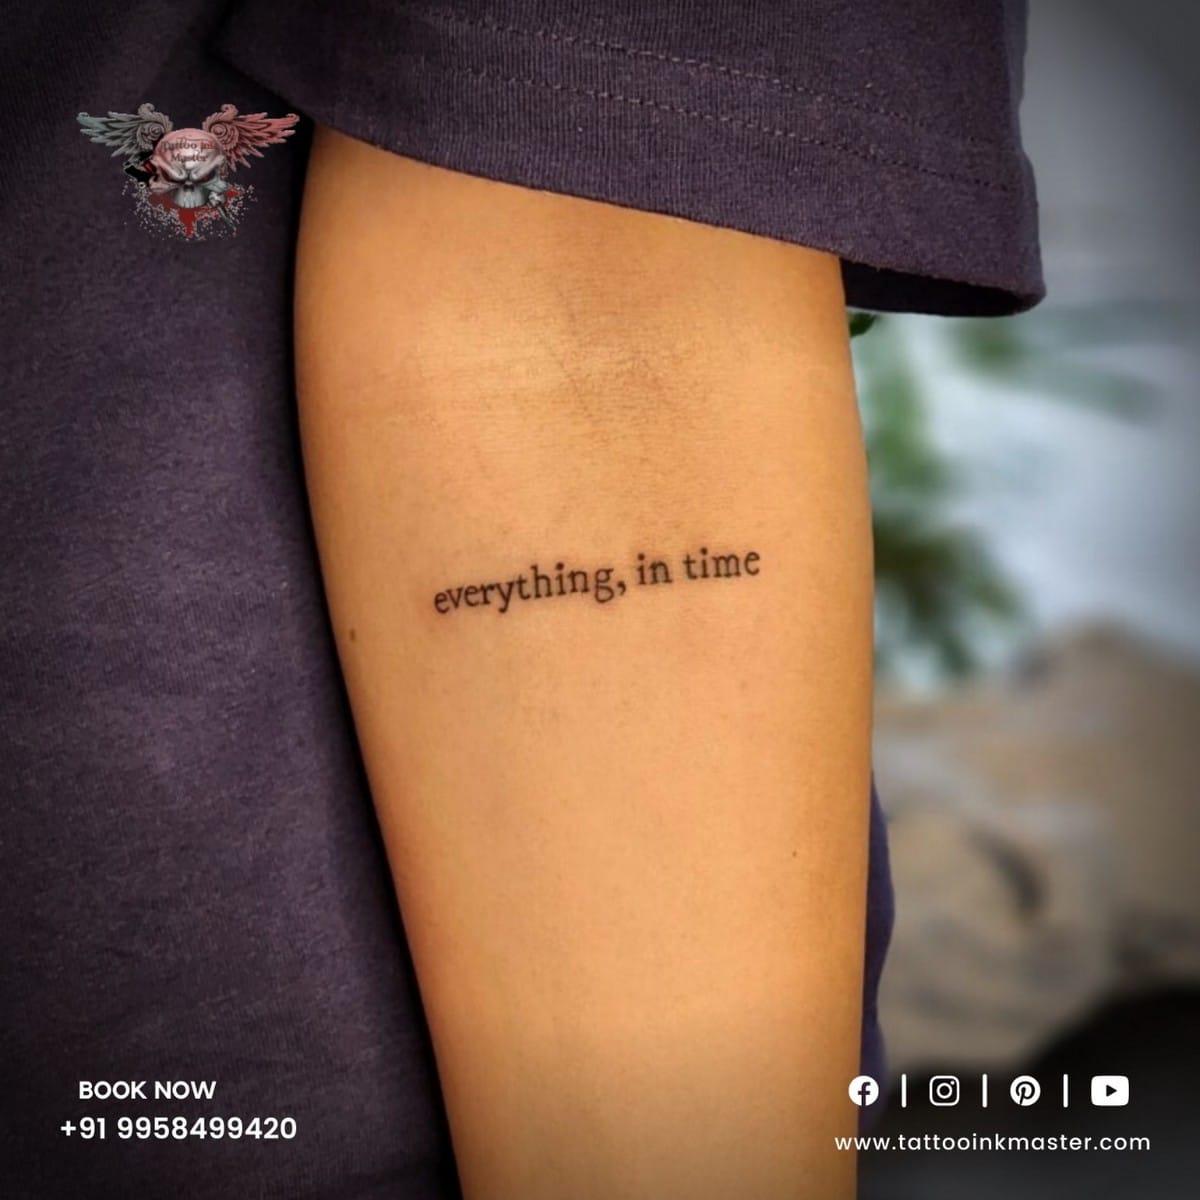 Demi Lovato's 'Stay Strong' Wrist Tattoos by emyapreda on DeviantArt